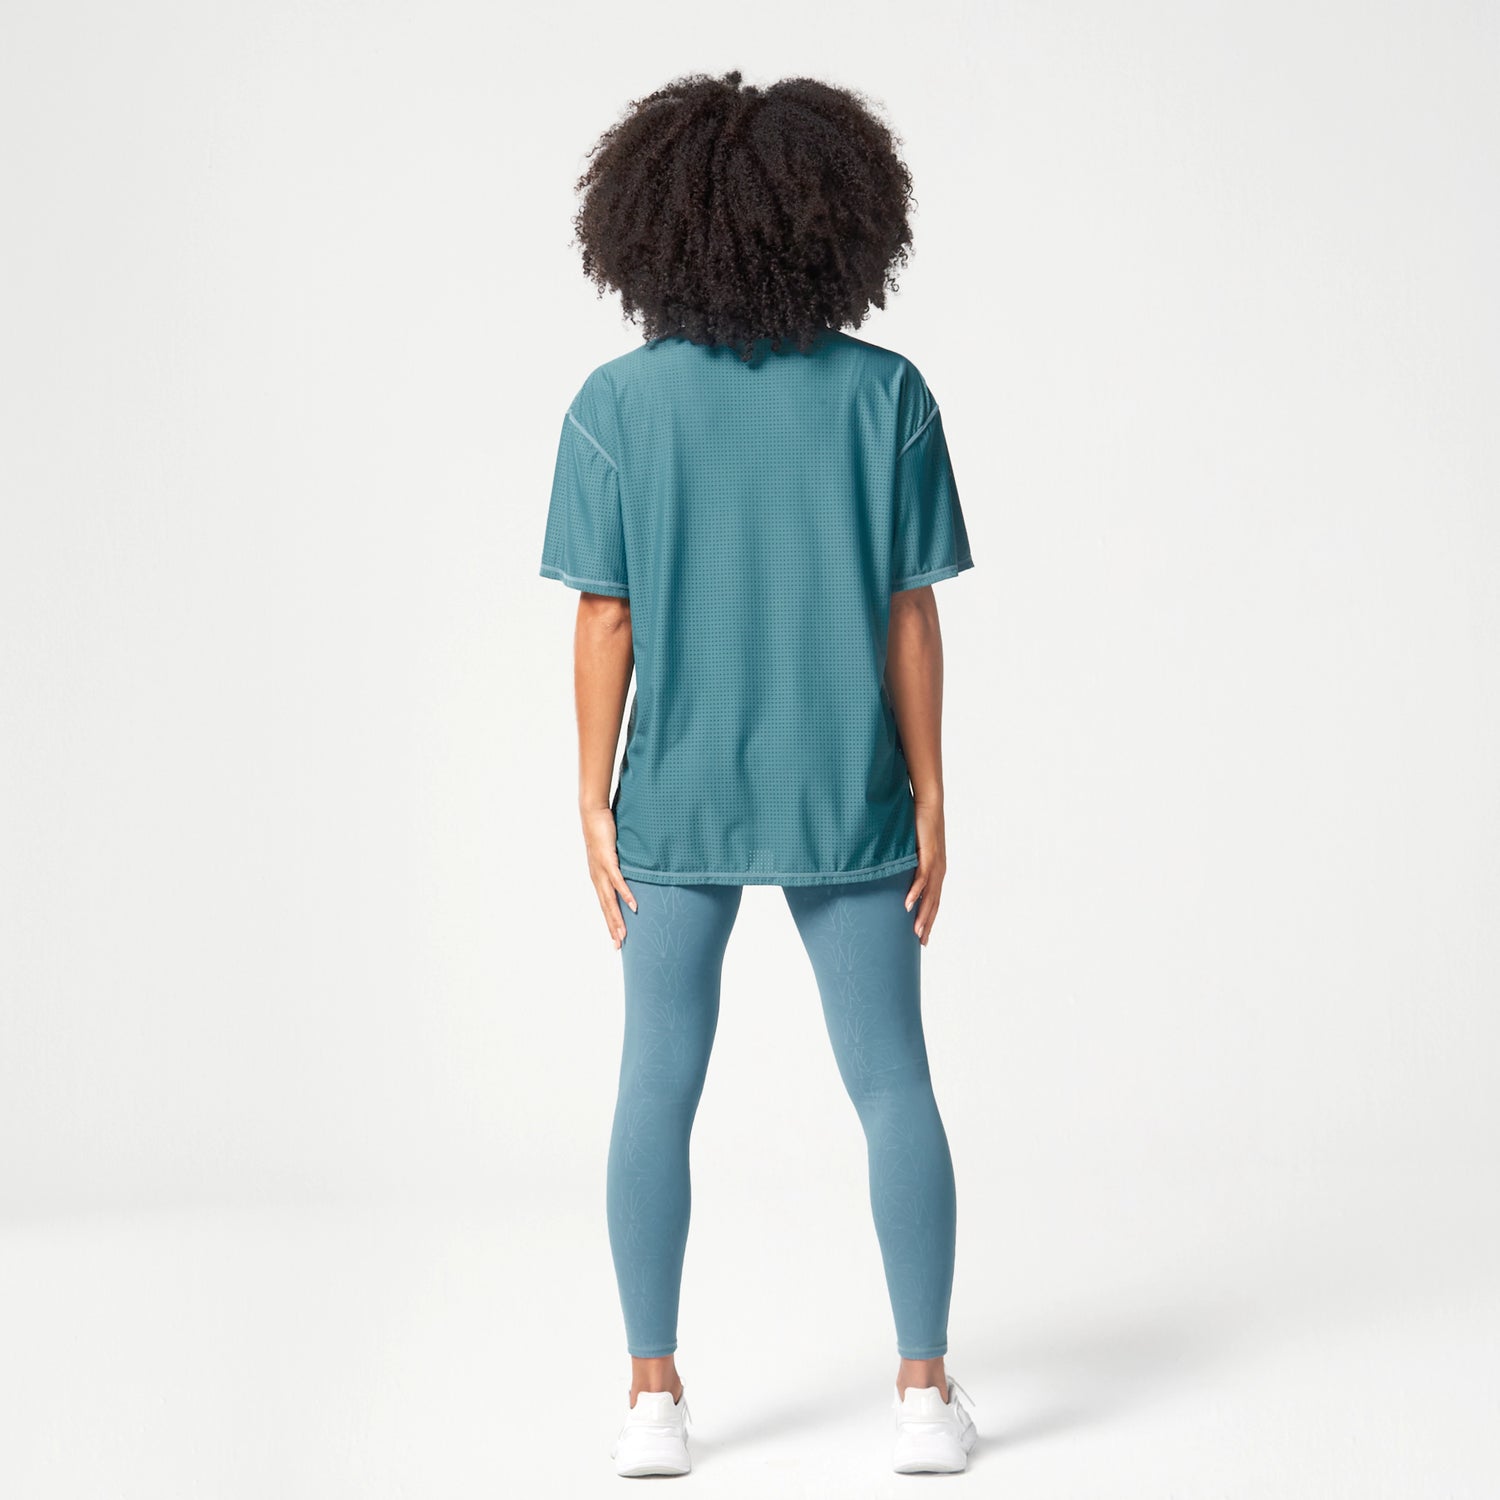 ES, Mesh Reversible Tee - Hydro, Workout Shirts Women